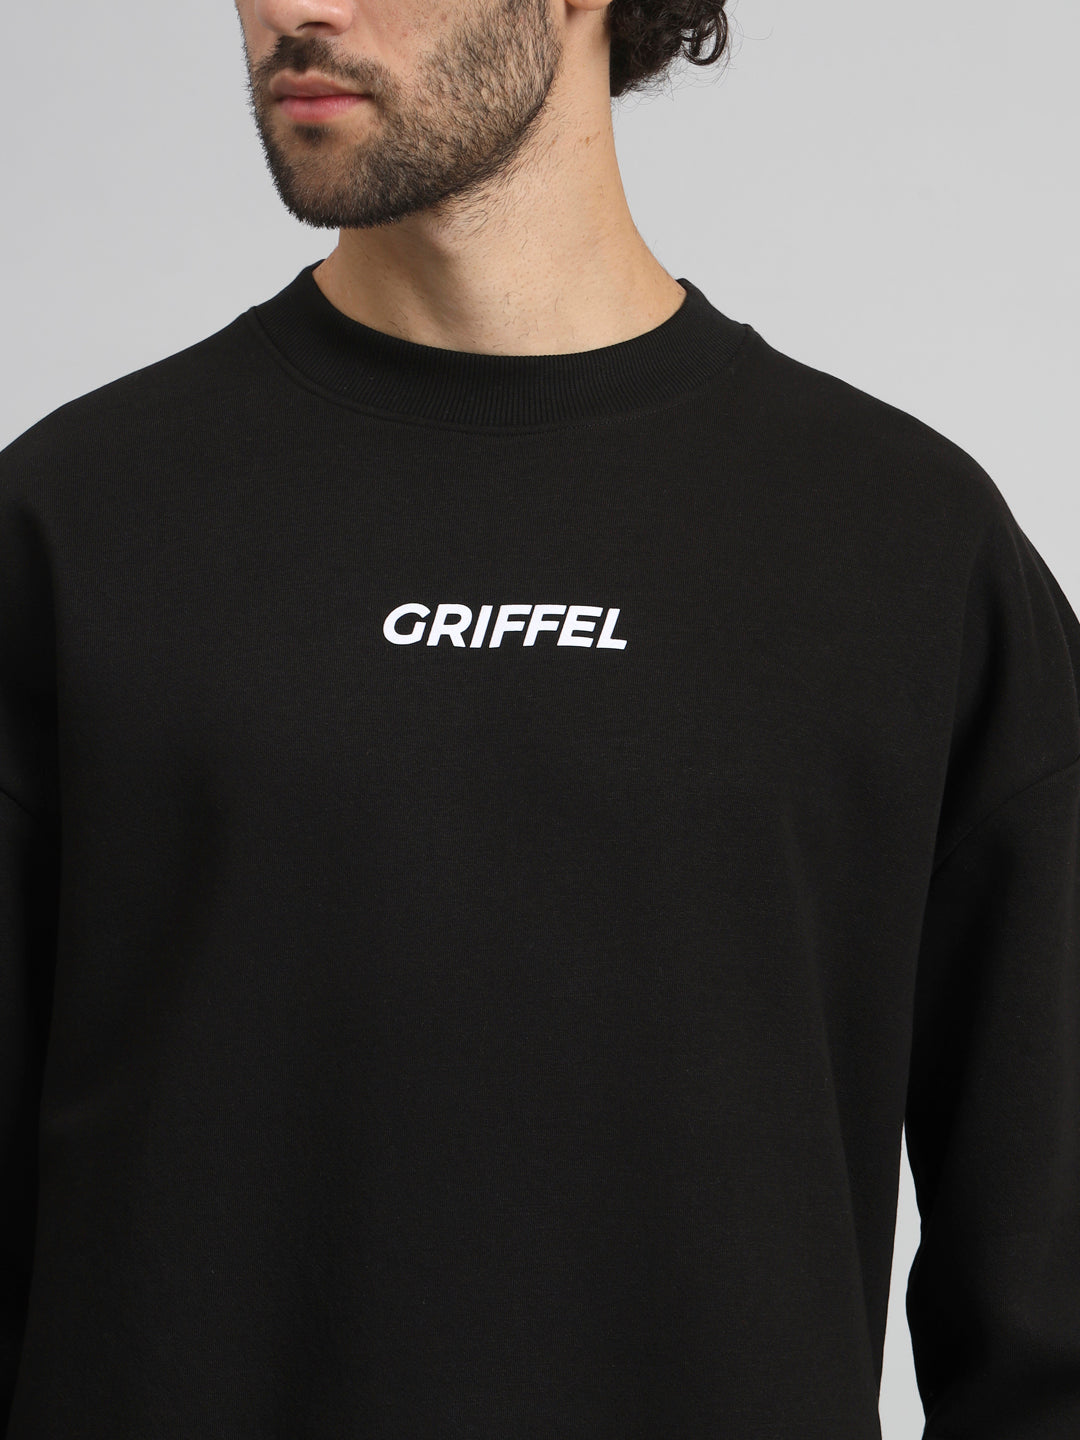 Griffel Men Oversized Fit Basic Round Neck 100% Cotton Fleece Black Tracksuit